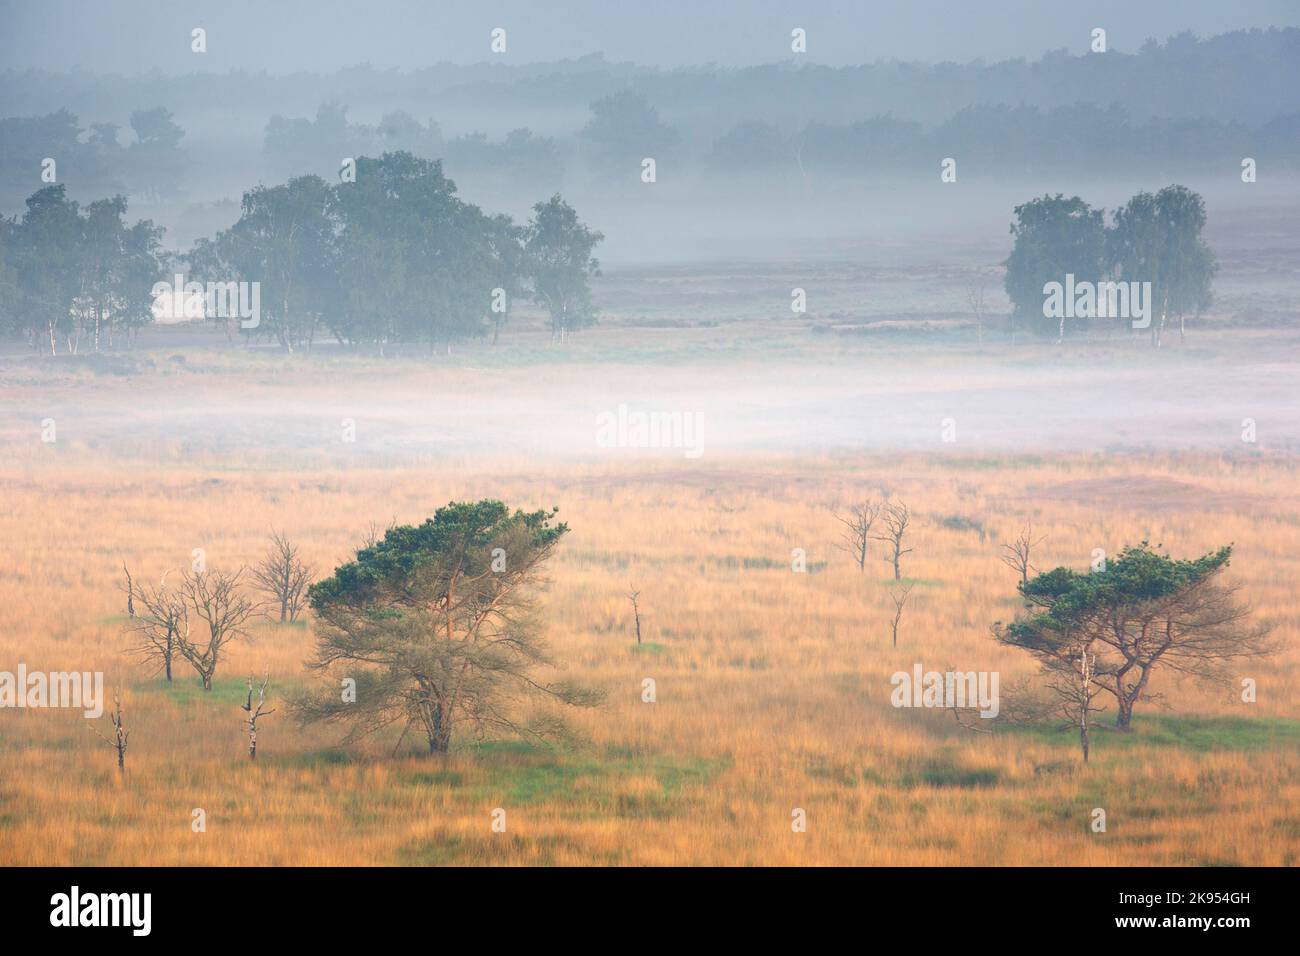 fog covers the heathland, aerial view, Belgium, Antwerp, Kalmthout, Kalmthoutse heide Stock Photo